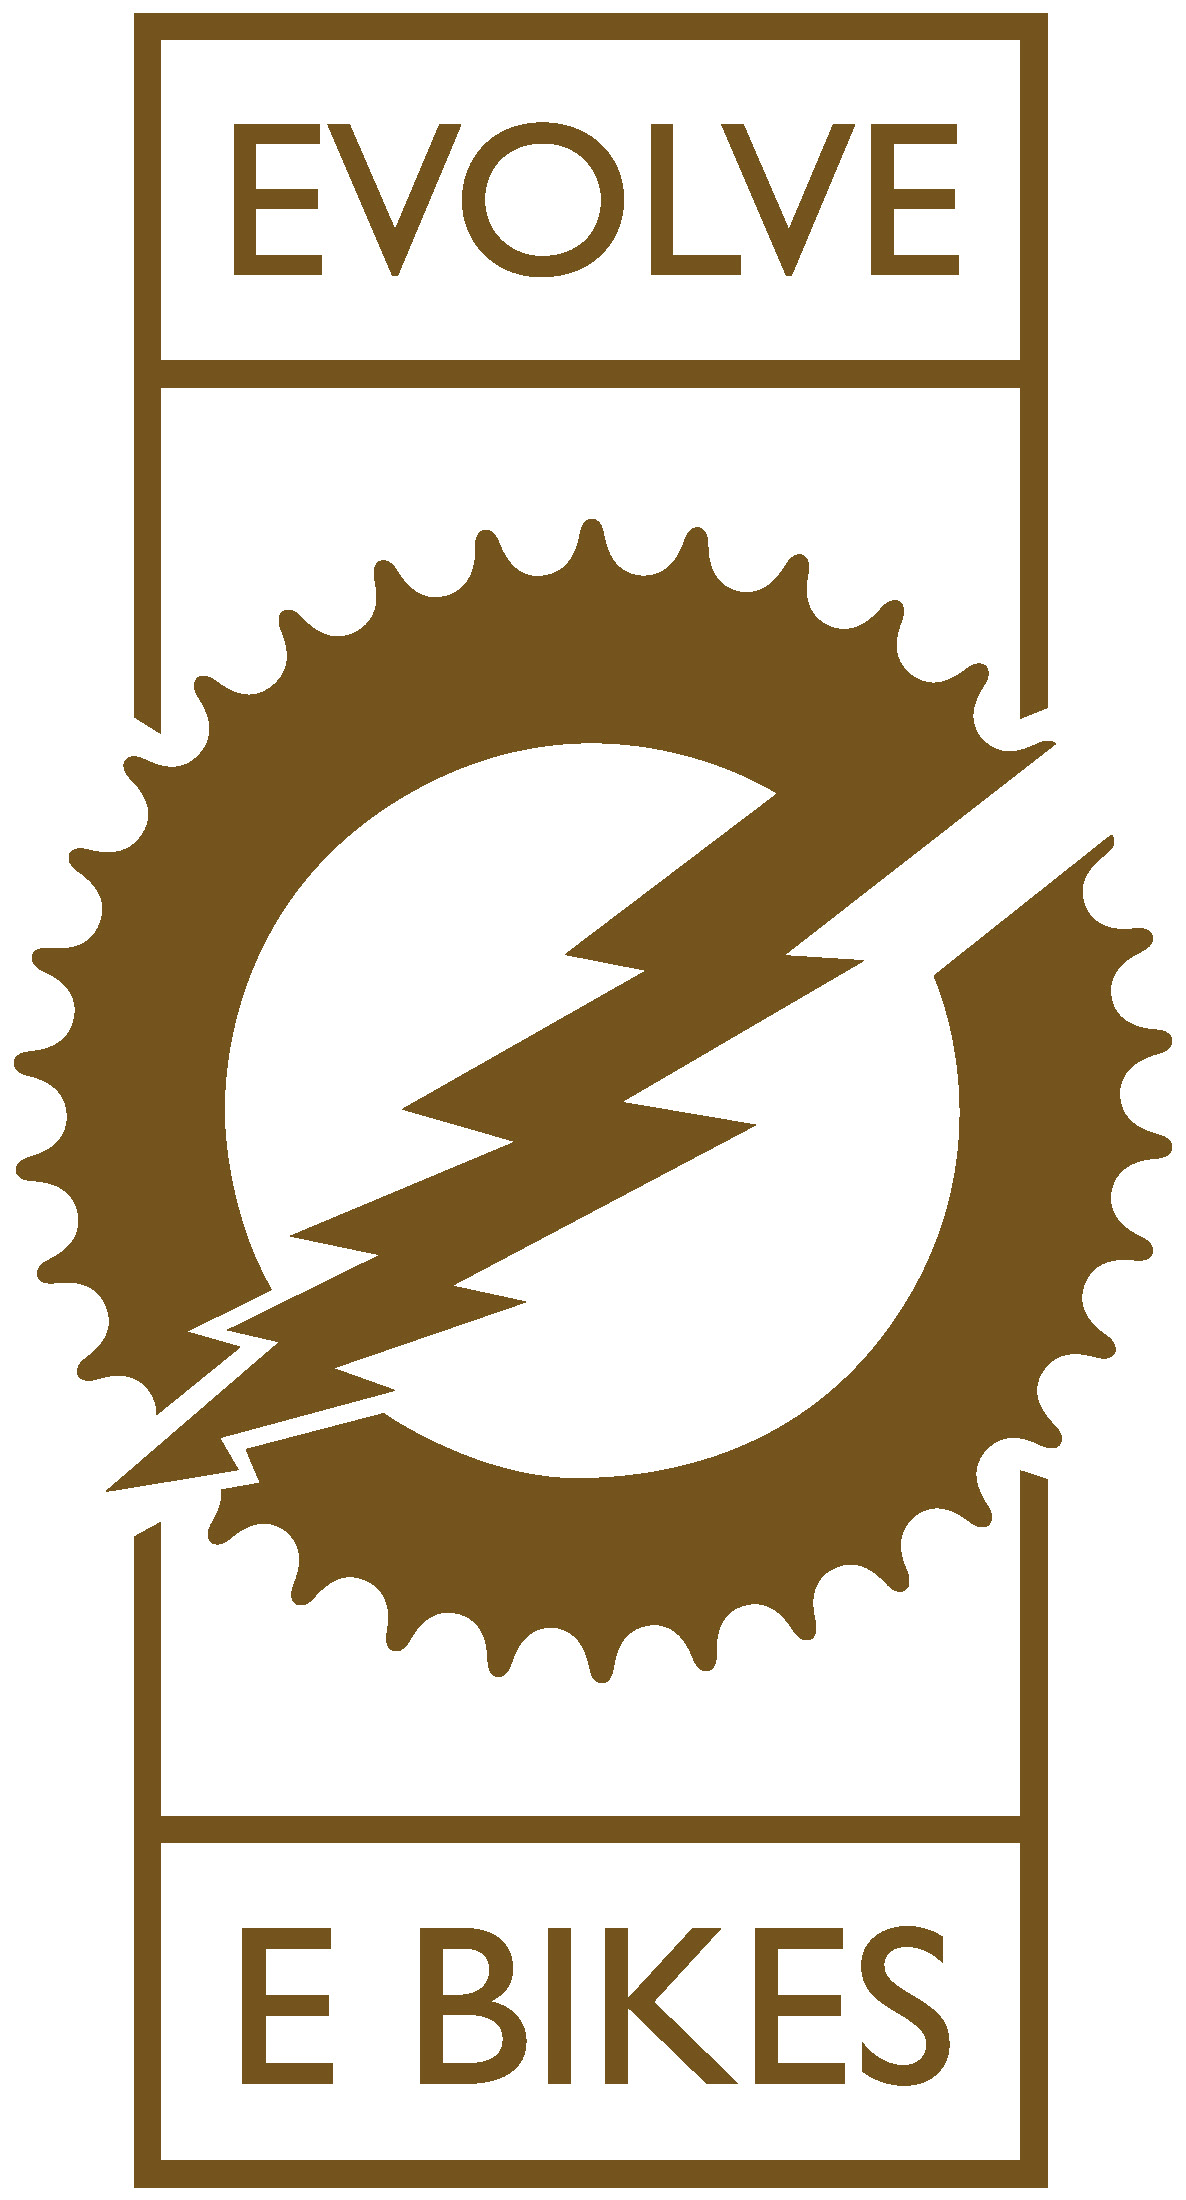 Evolve Electric Bikes LLC